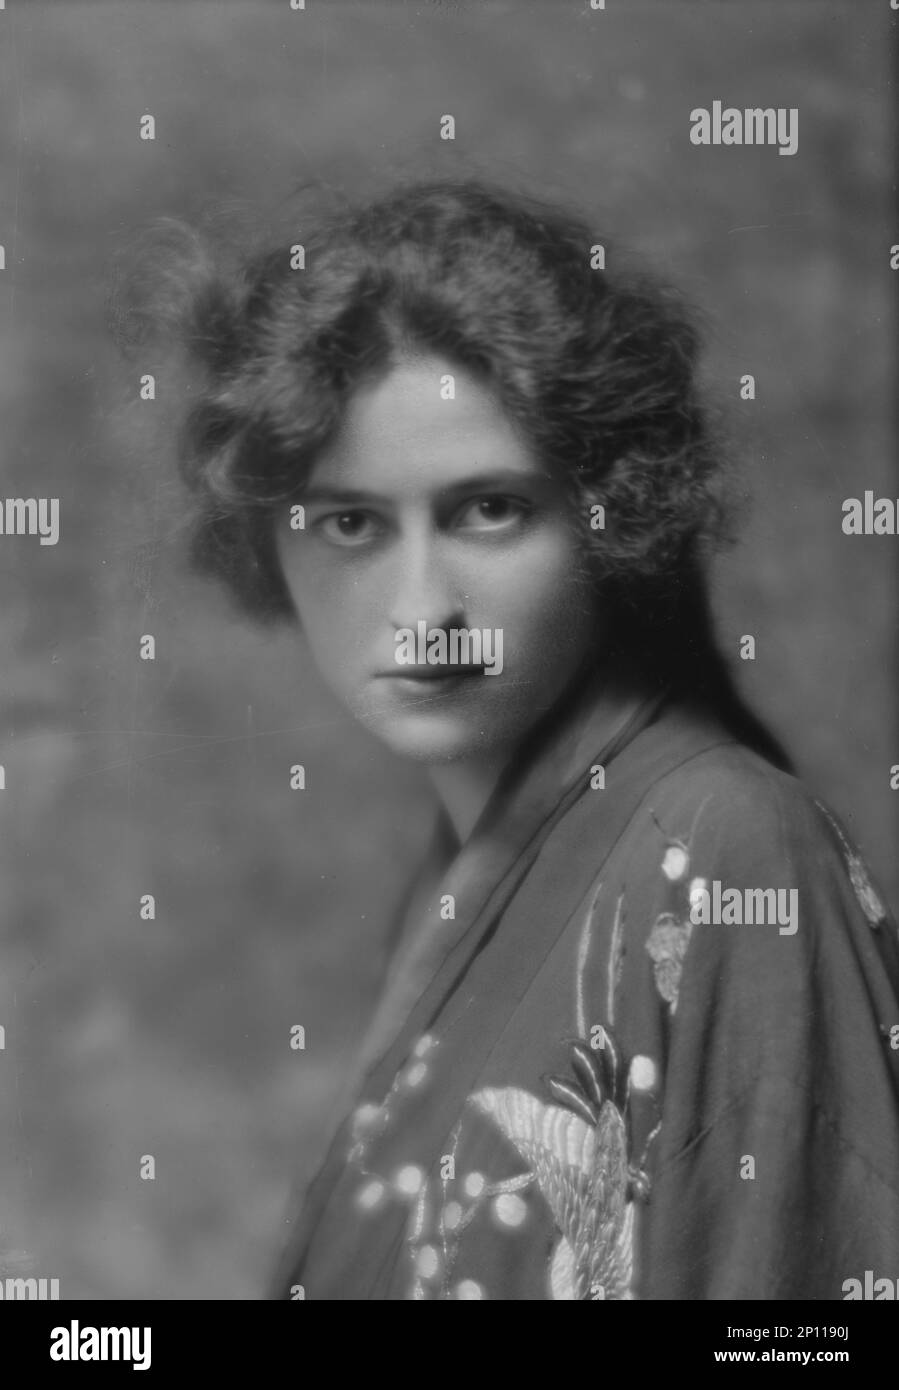 Dilling, Charlene, Miss, portrait photograph, 1914 Apr. 21. Stock Photo